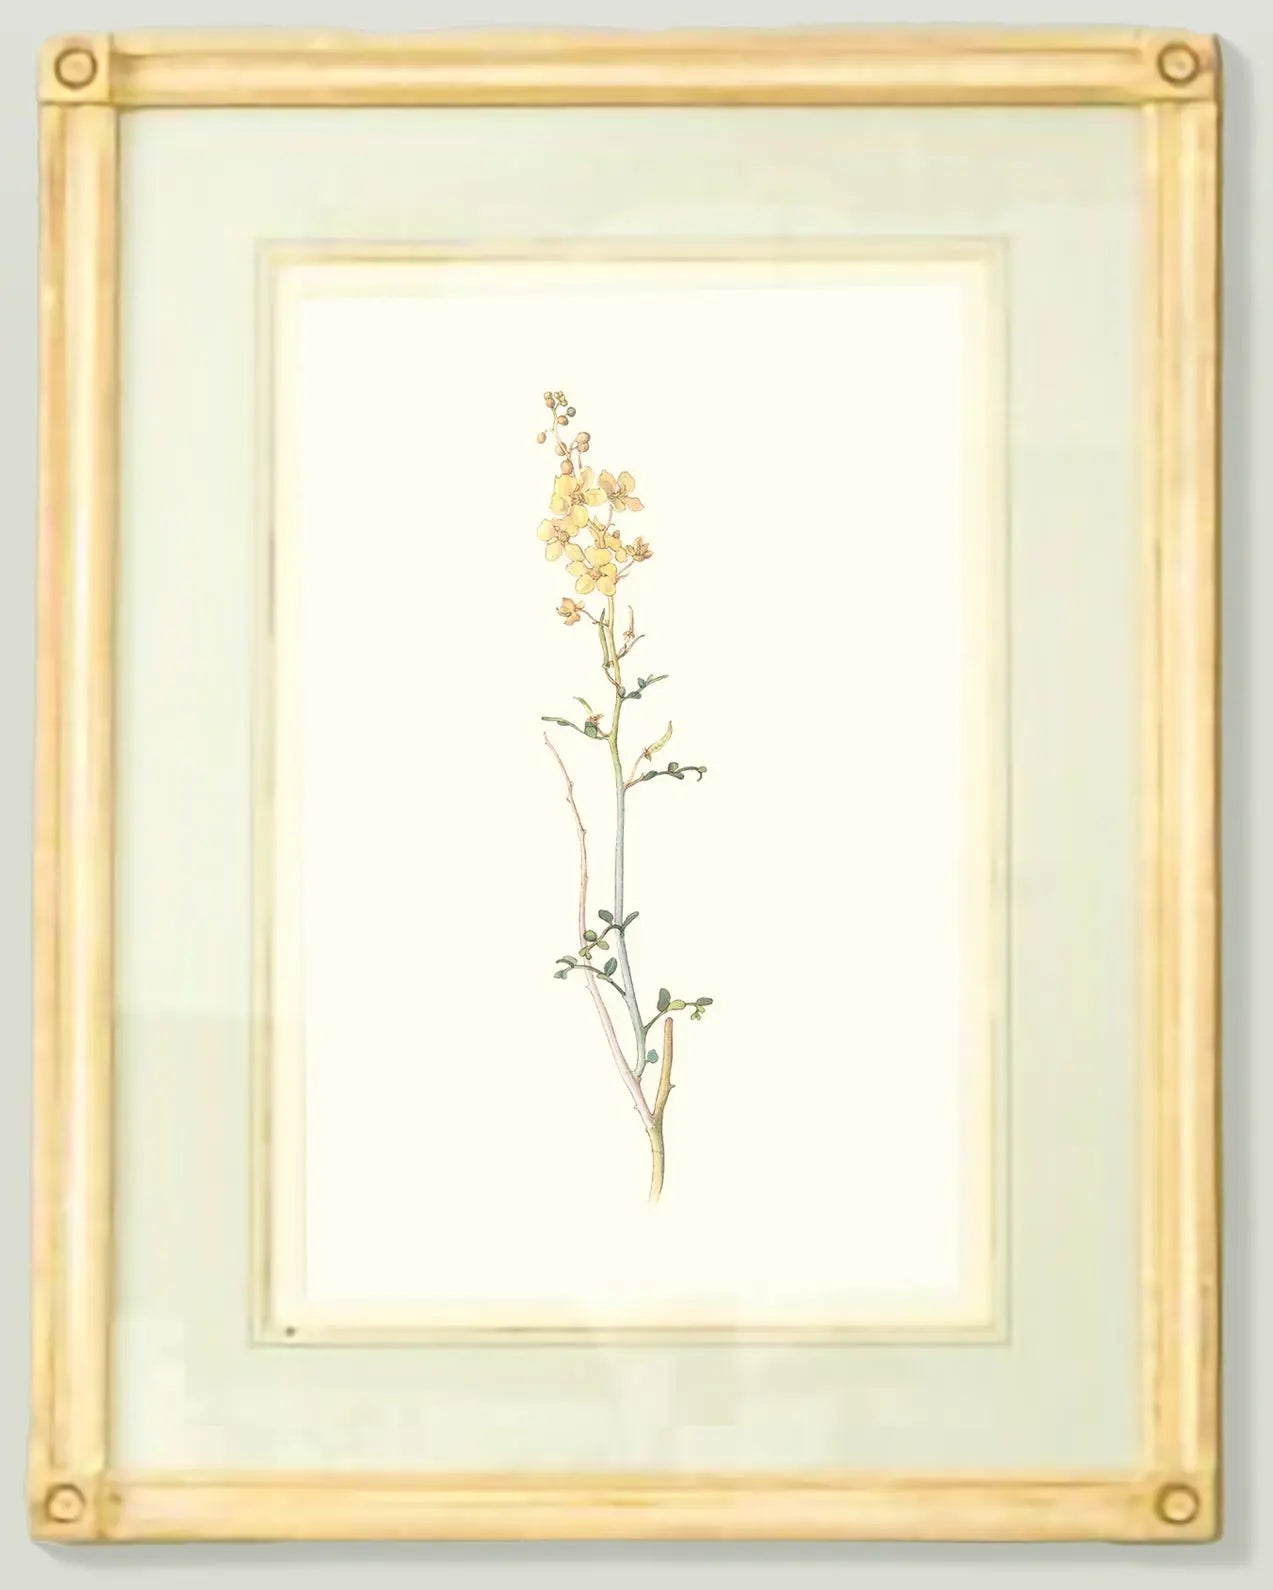 Naturalist Watercolor Illustrations: Wildflower Botanicals, Vol. I - Emblem Atelier